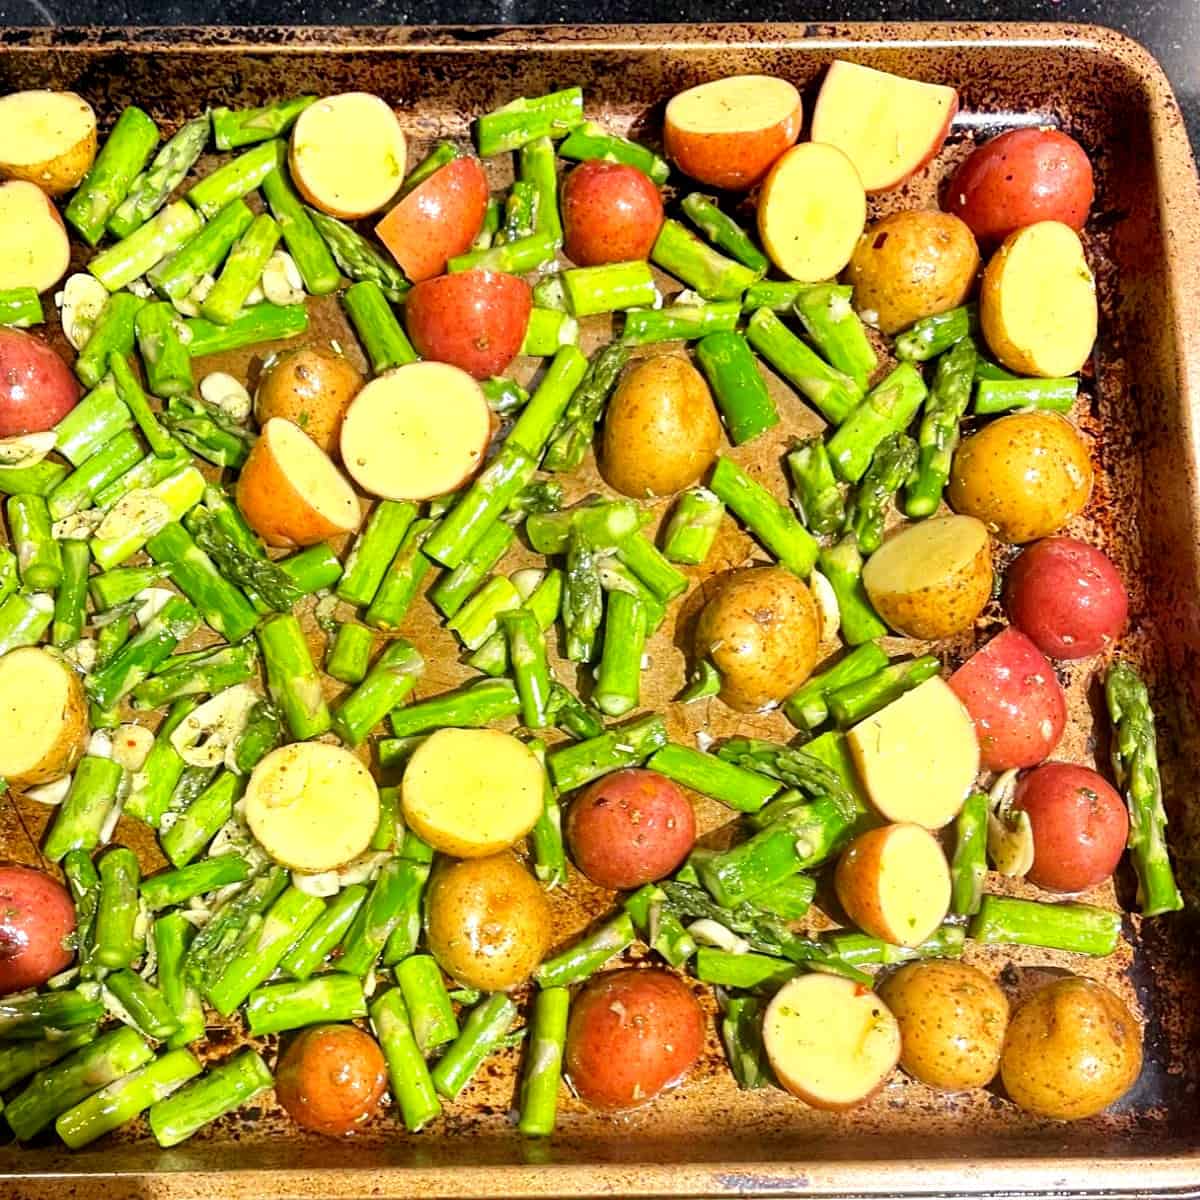 Asparagus and potatoes on baking sheet before baking.